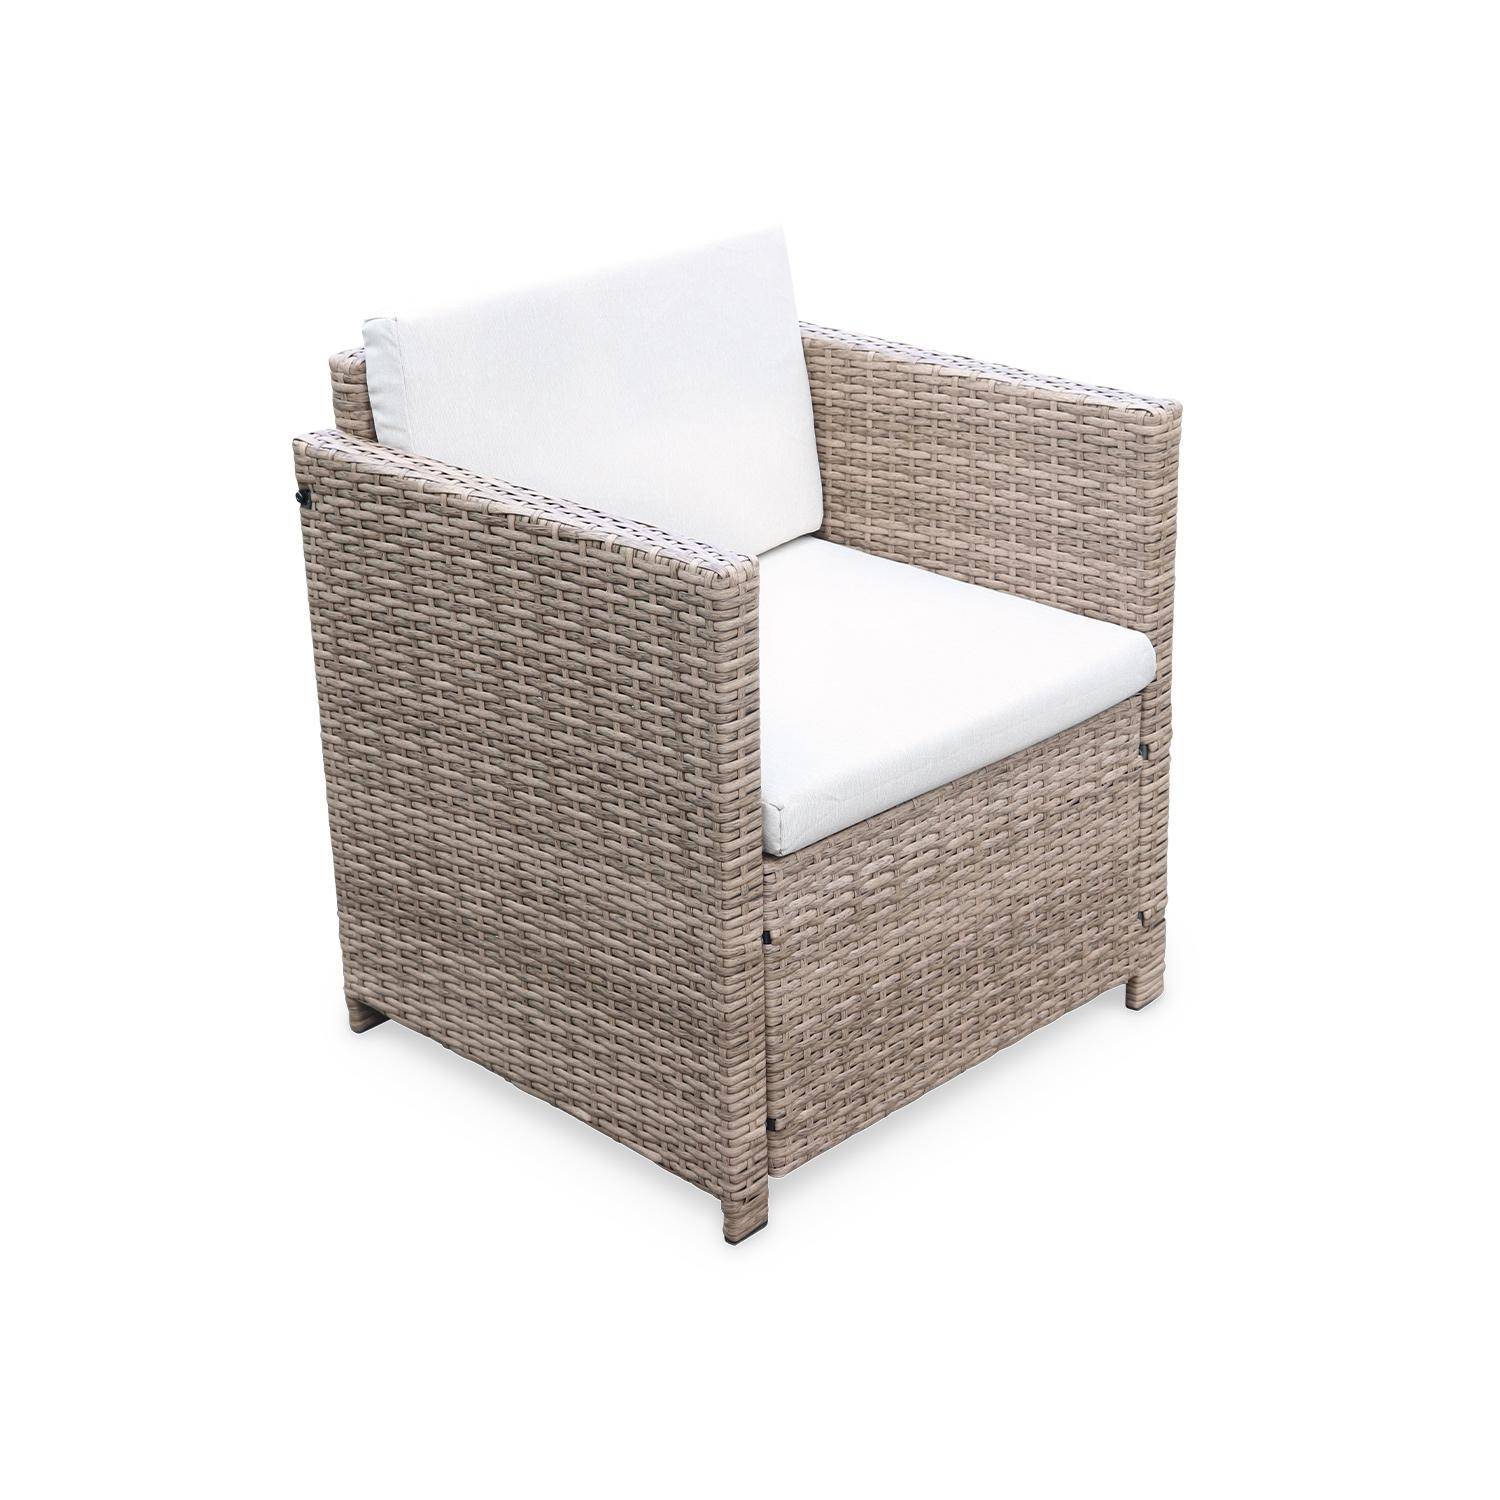 4-seater polyrattan garden sofa set - sofa, 2 armchairs, coffee table - Perugia - Natural Beige rattan, Beige cushions Photo4